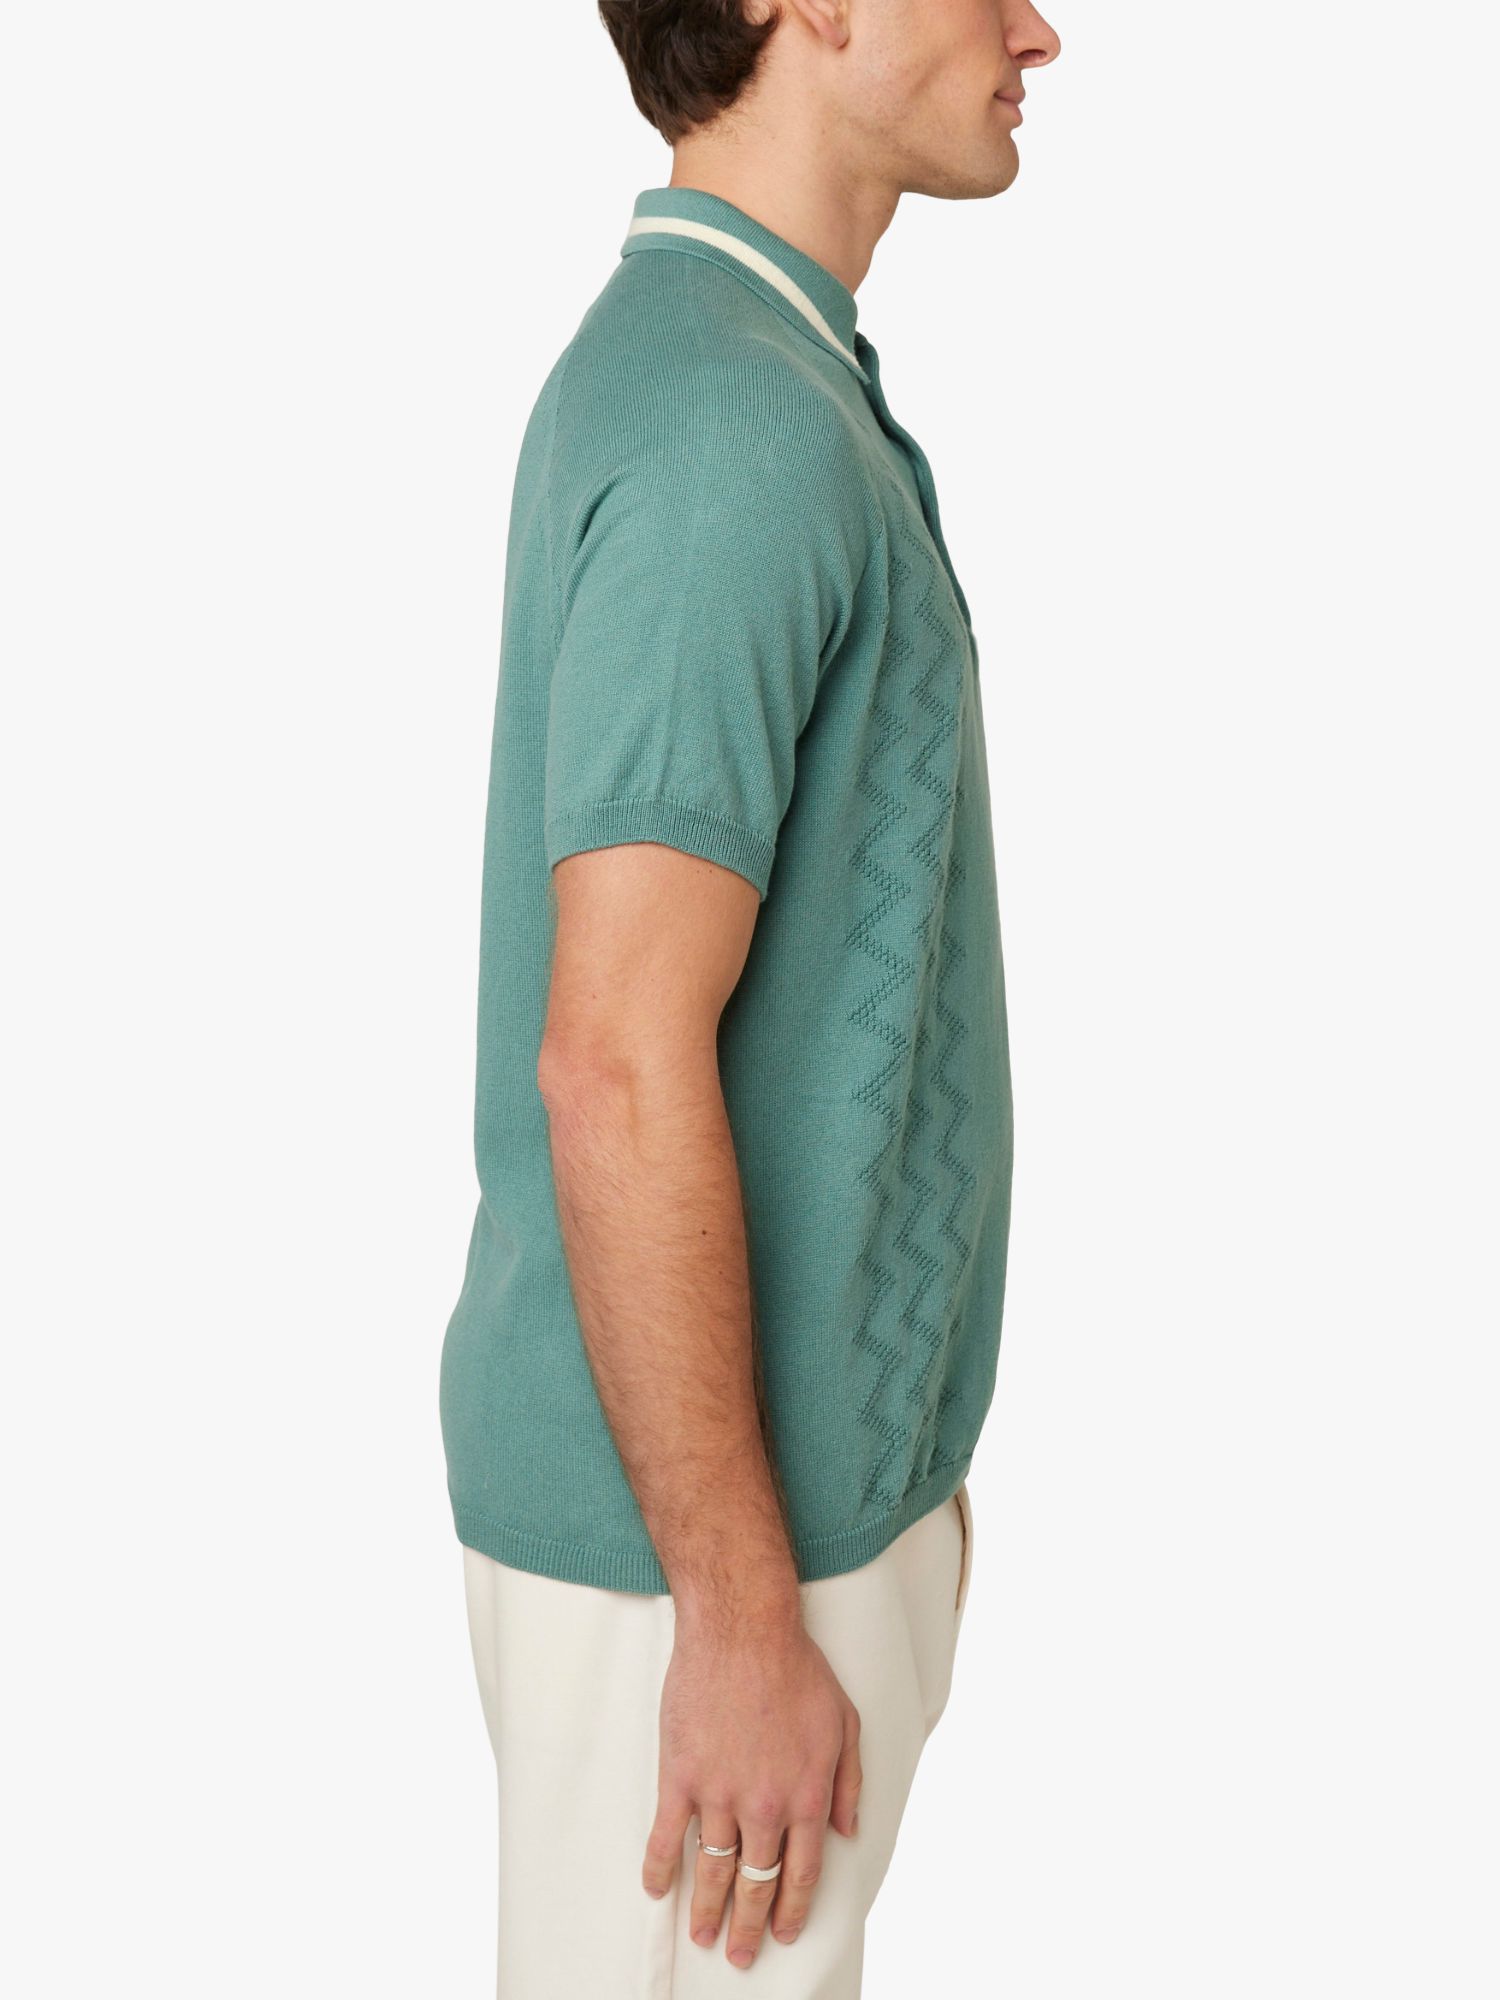 Peregrine Textured Polo Shirt, Green, M